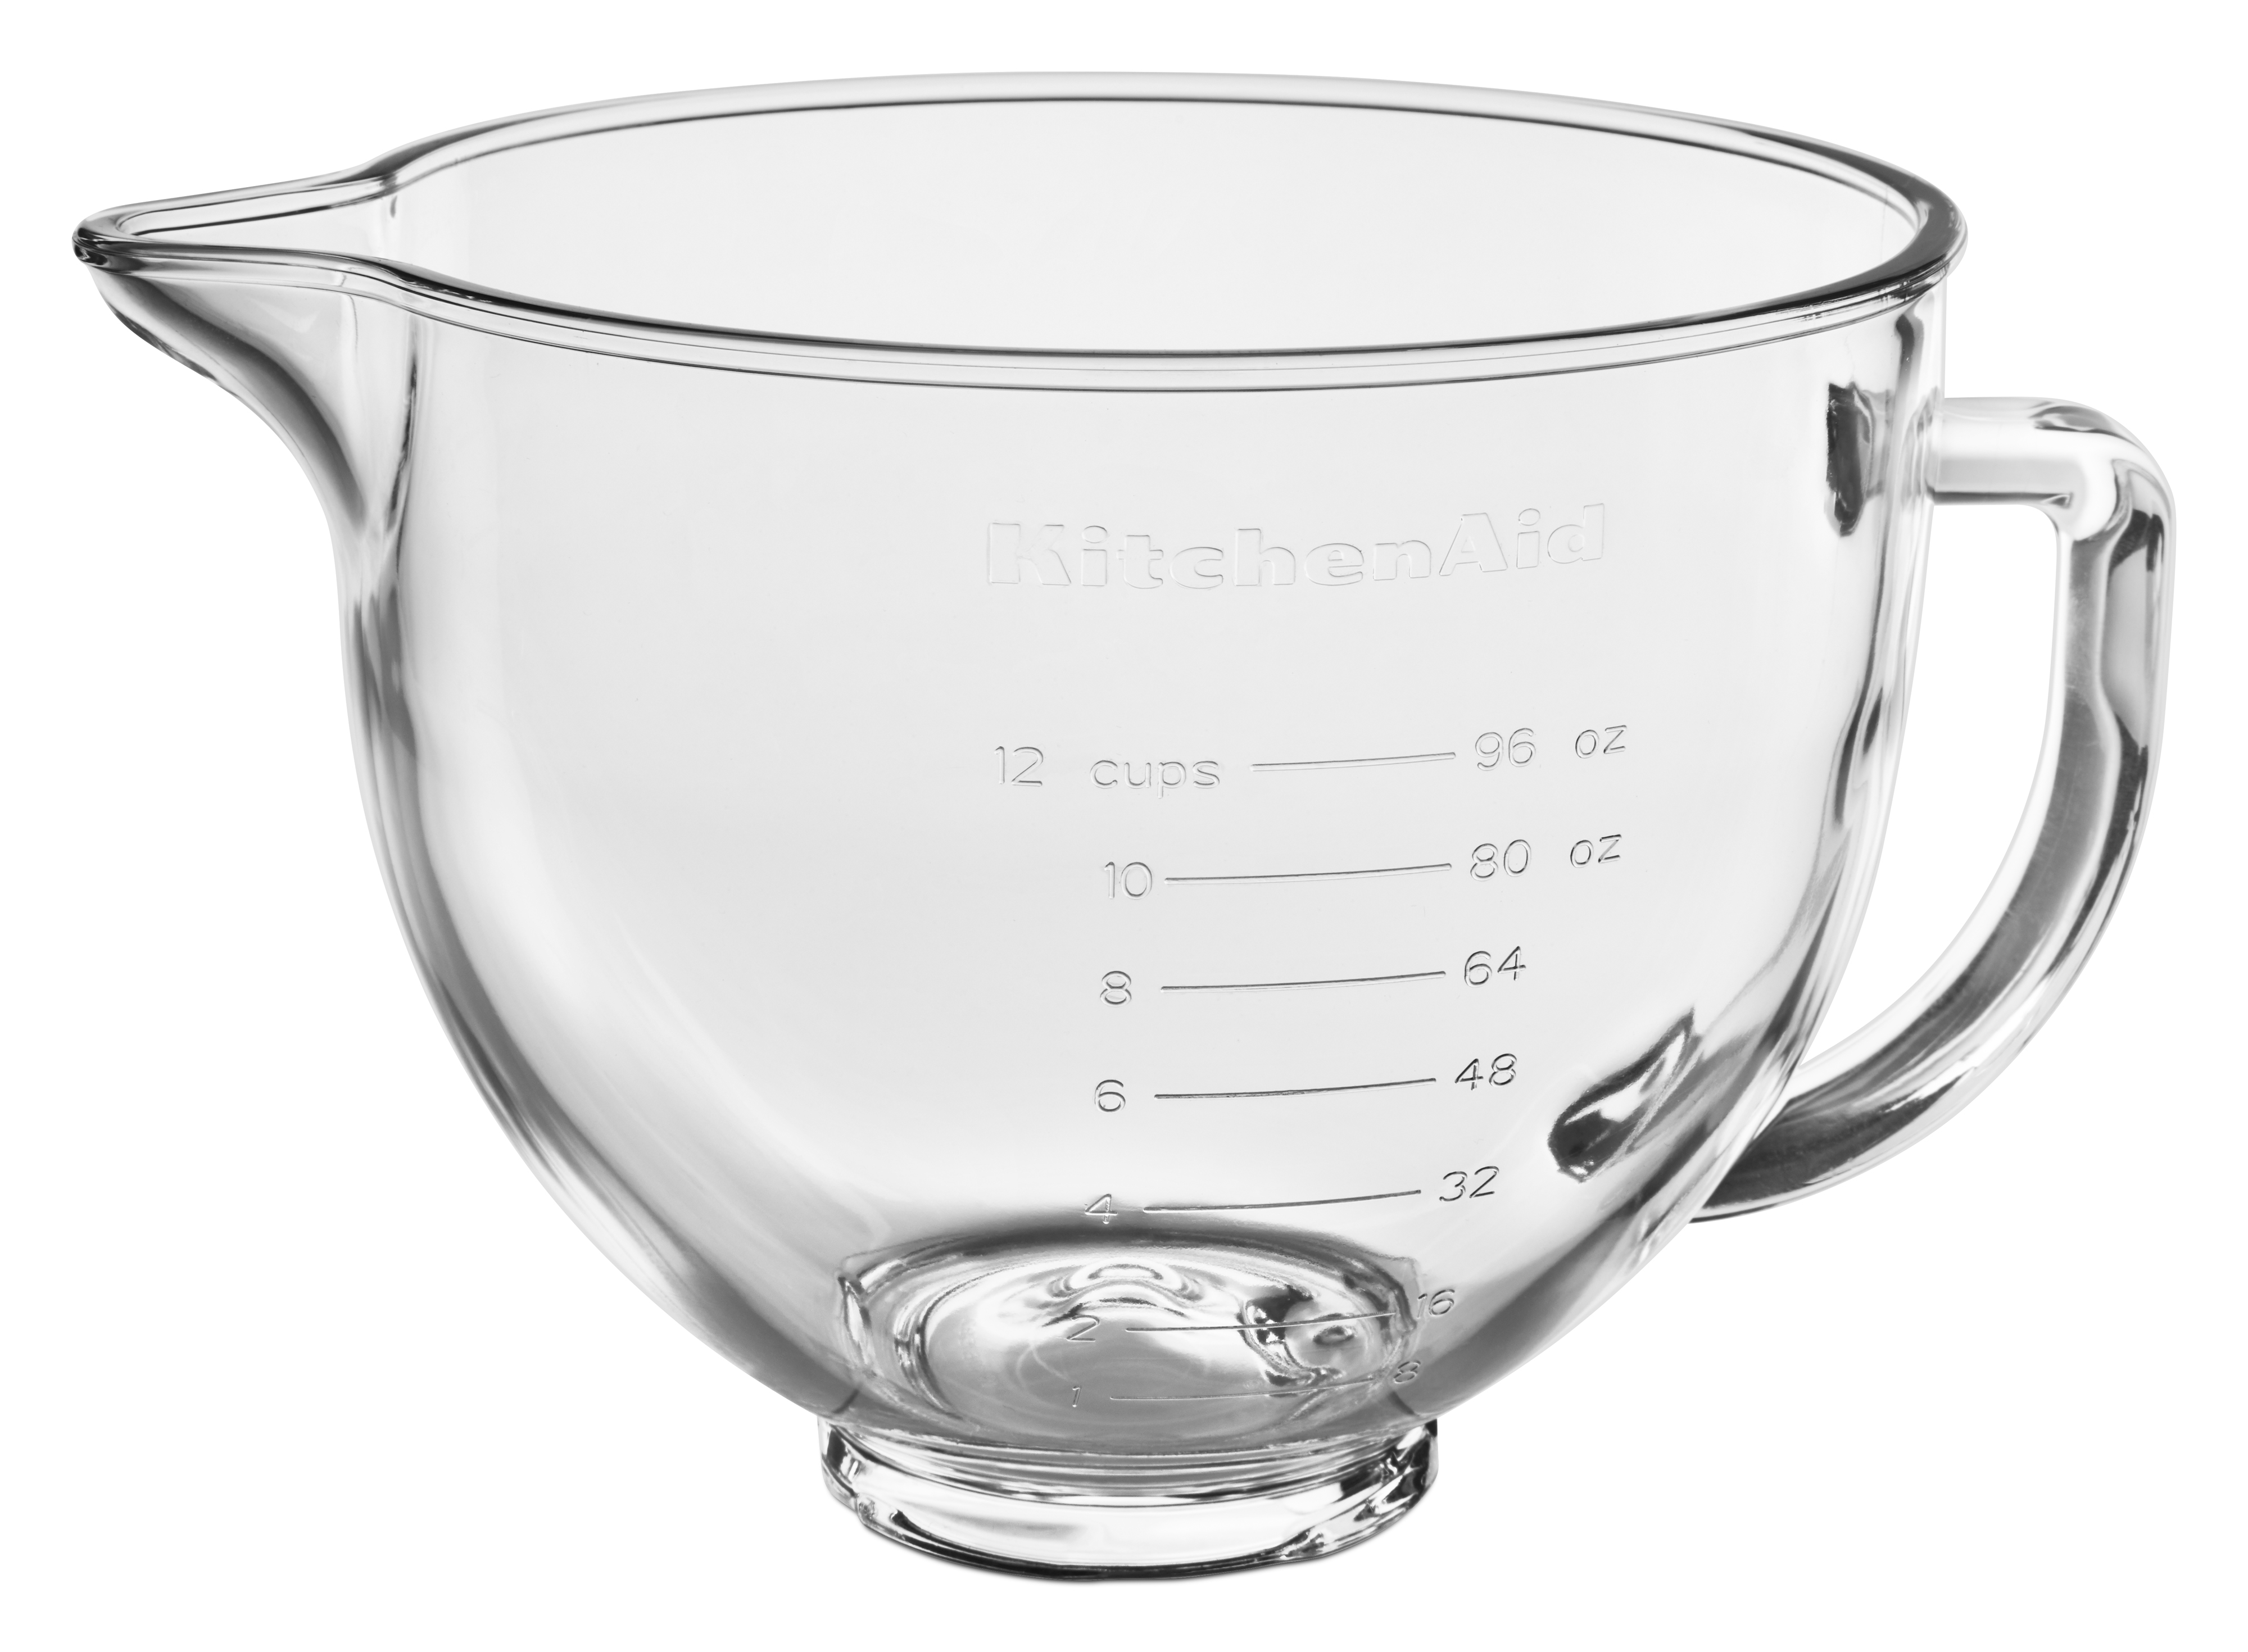 KitchenAid 5 Quart Tilt-Head Glass Bowl with Measurement Markings, Clear, KSM5NLGB - image 1 of 5